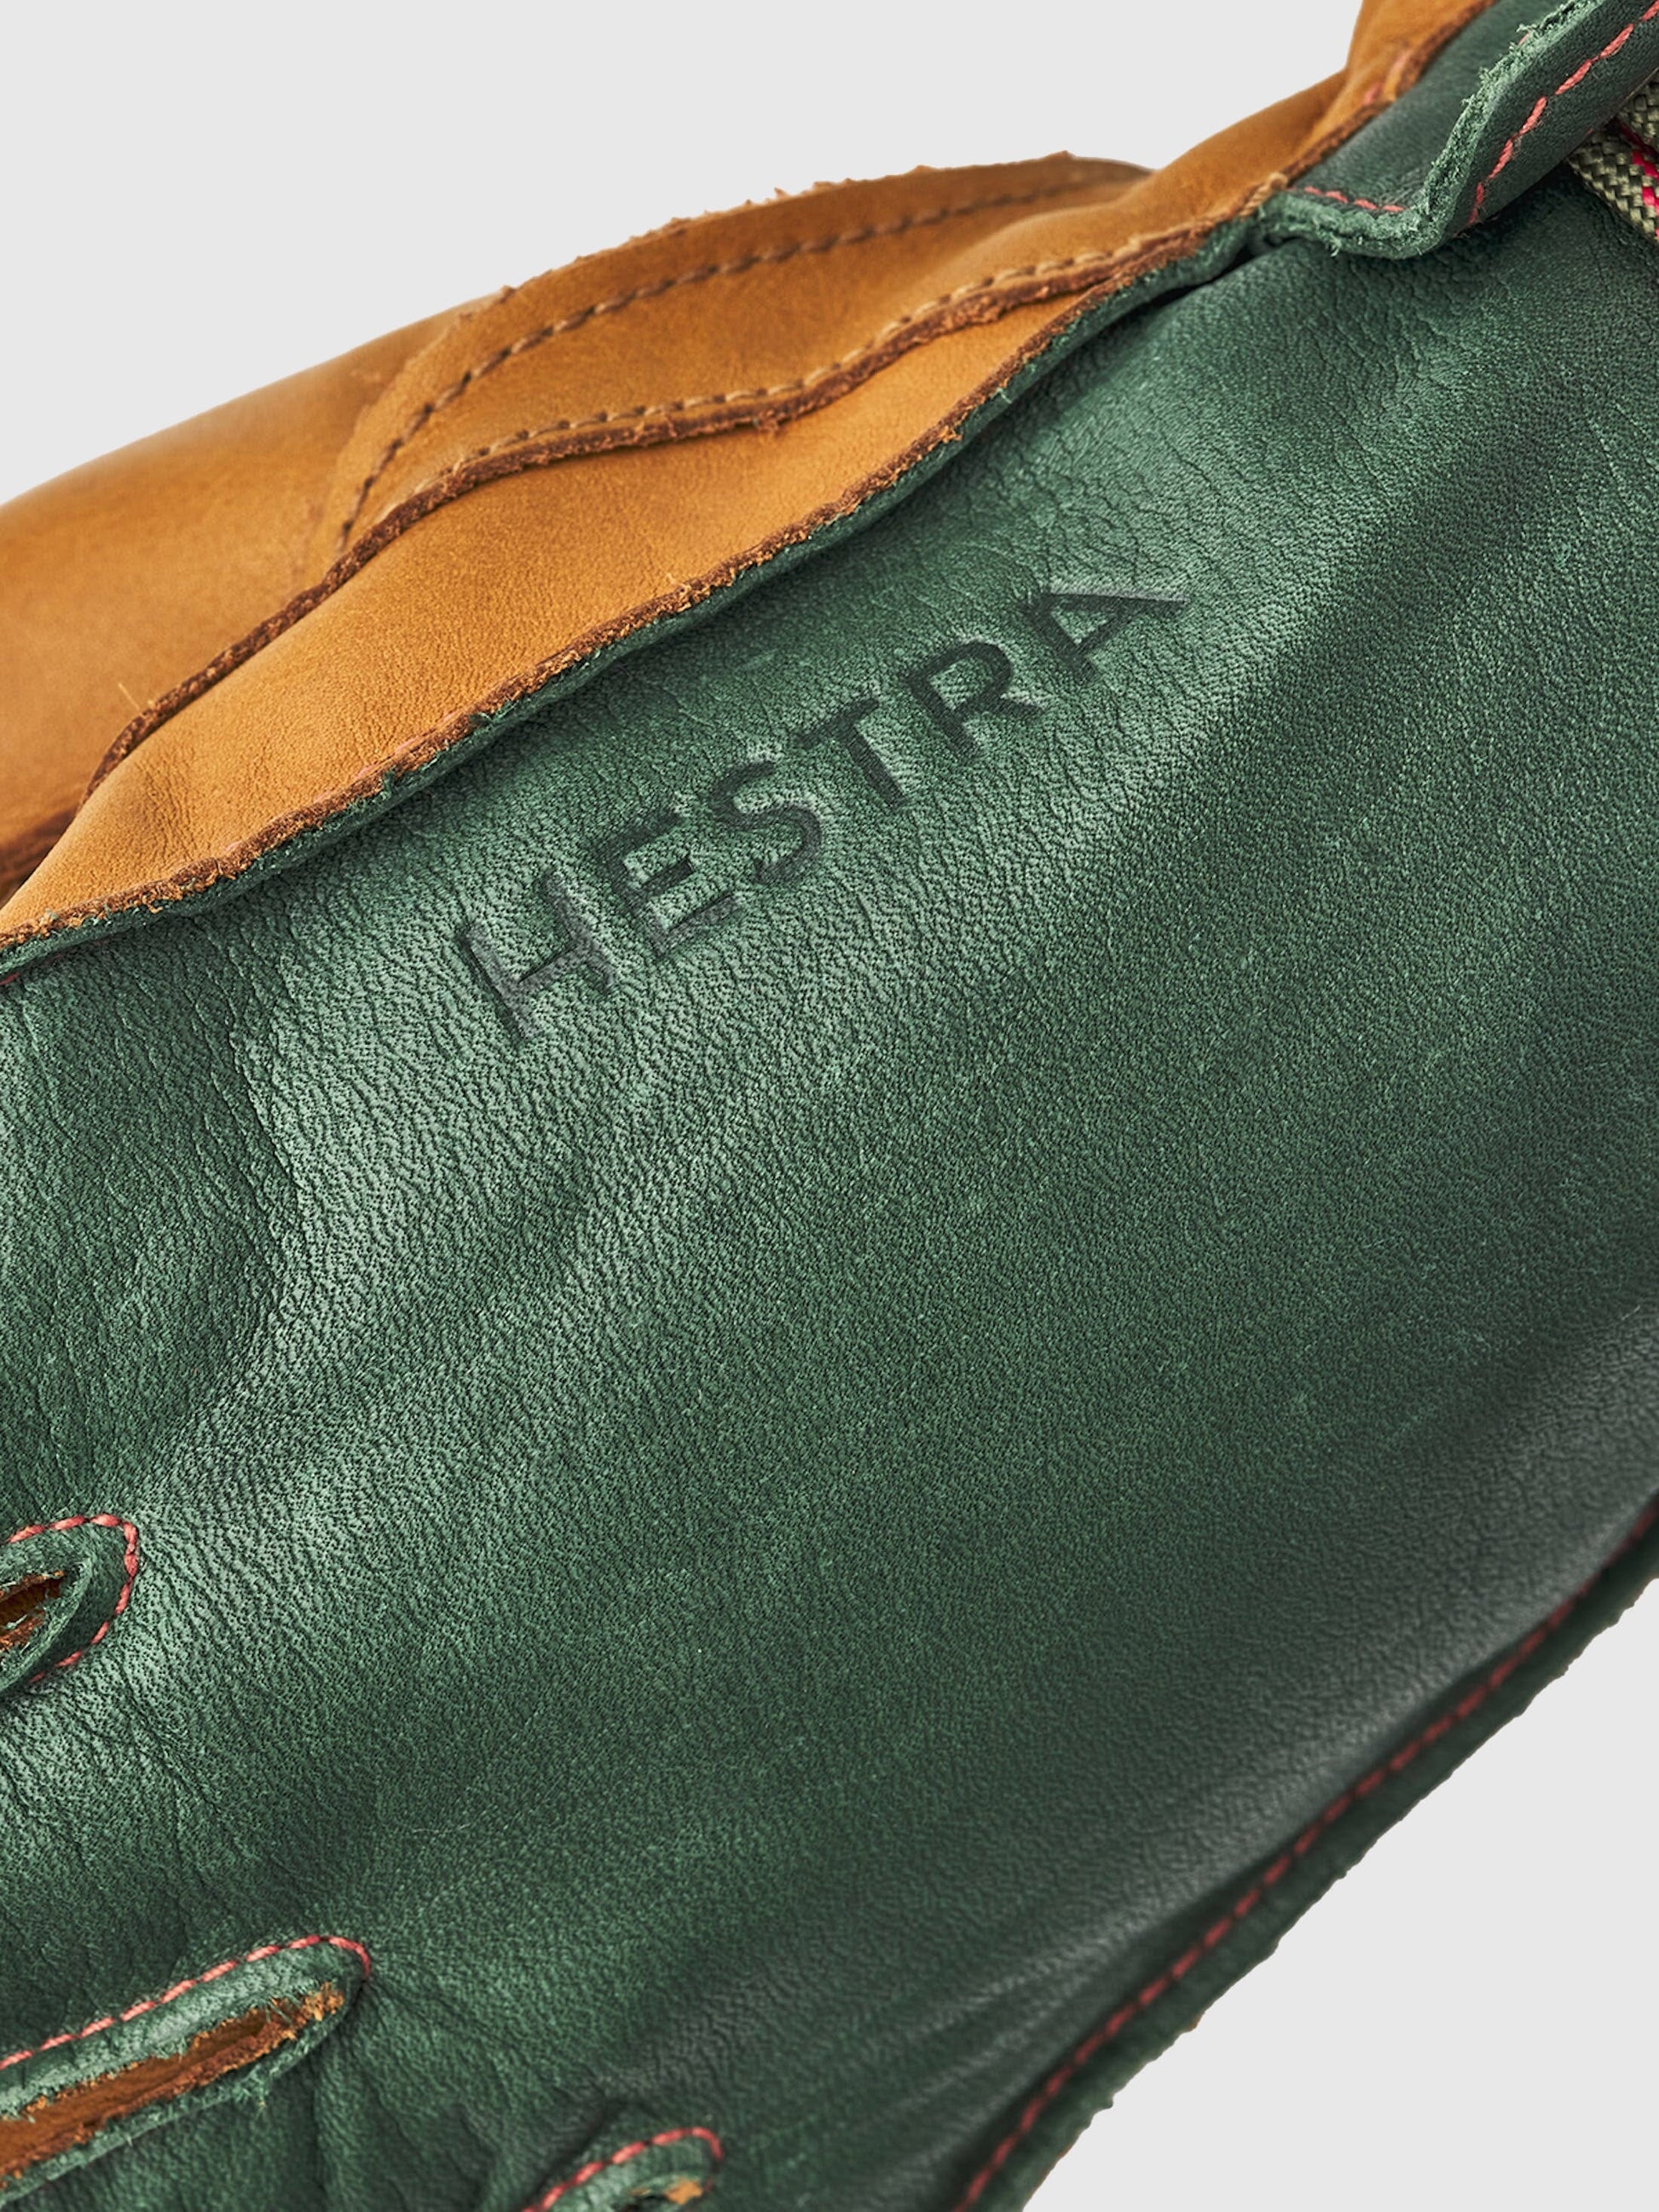 Hestra Wakayama Gloves - Forest / Cork Gloves Hestra 